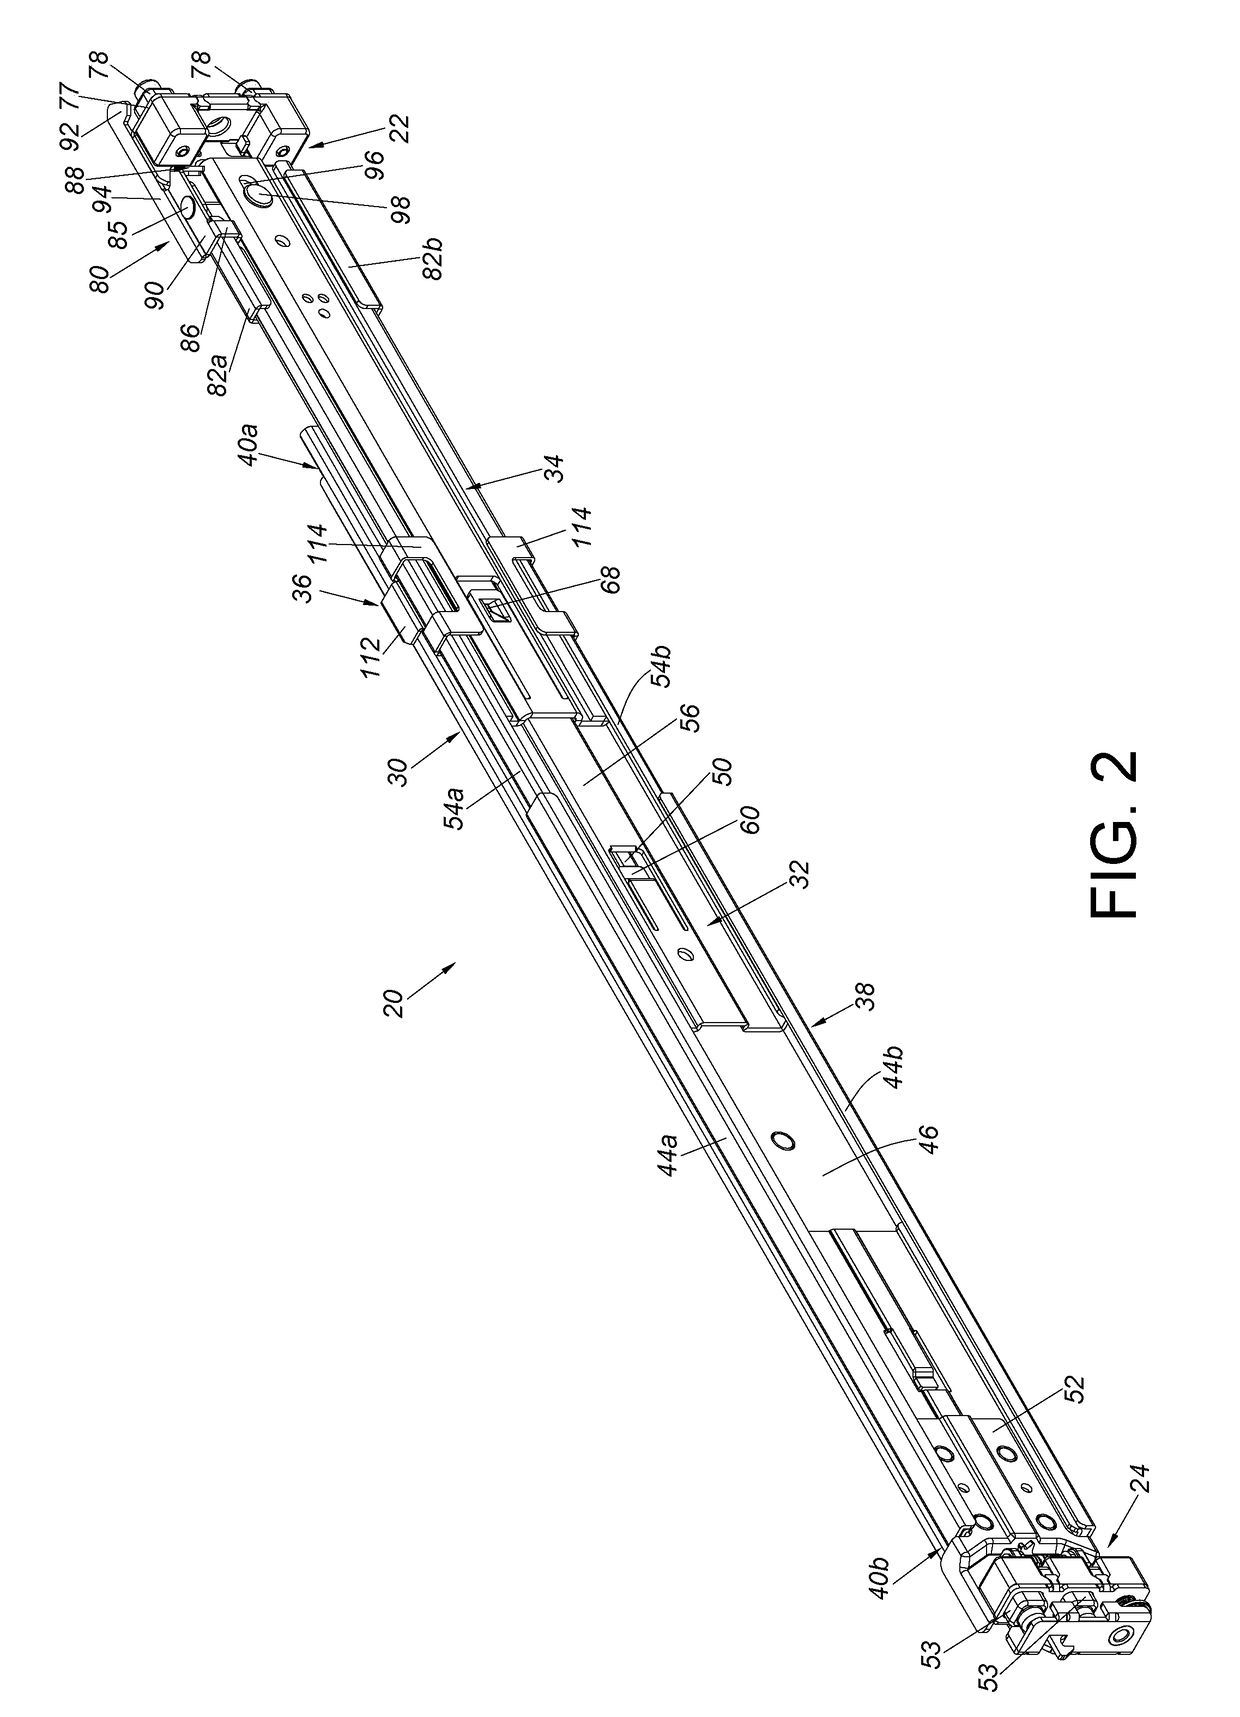 Slide rail mechanism